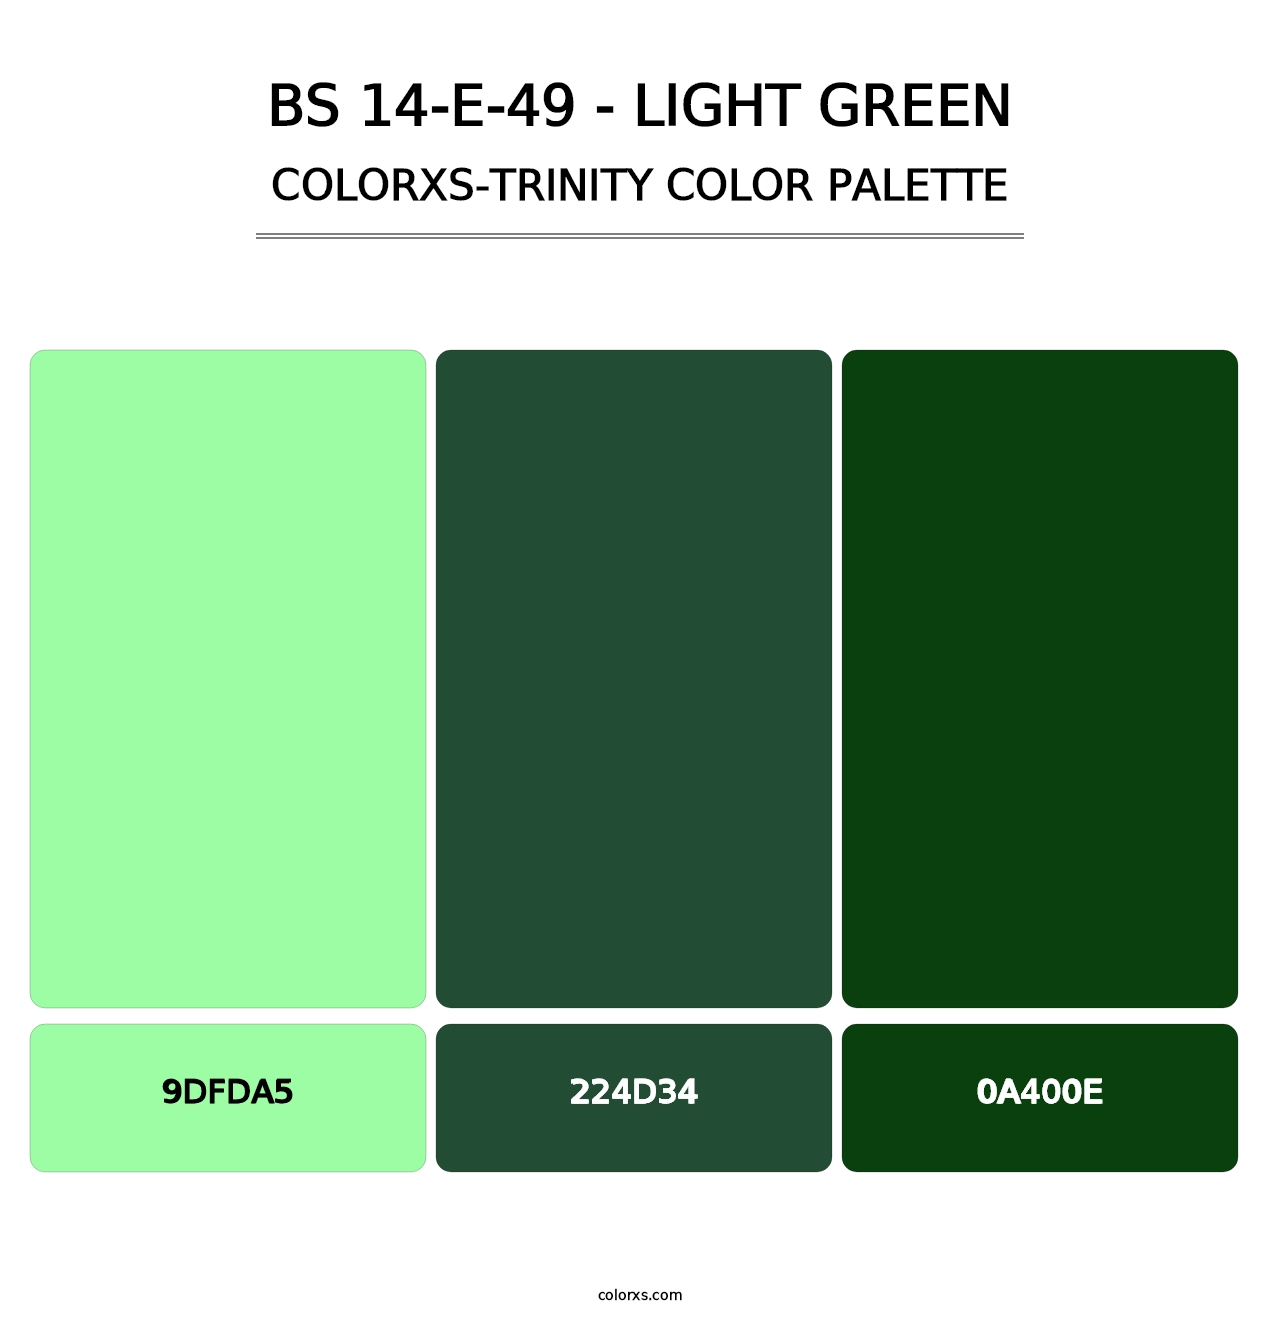 BS 14-E-49 - Light Green - Colorxs Trinity Palette